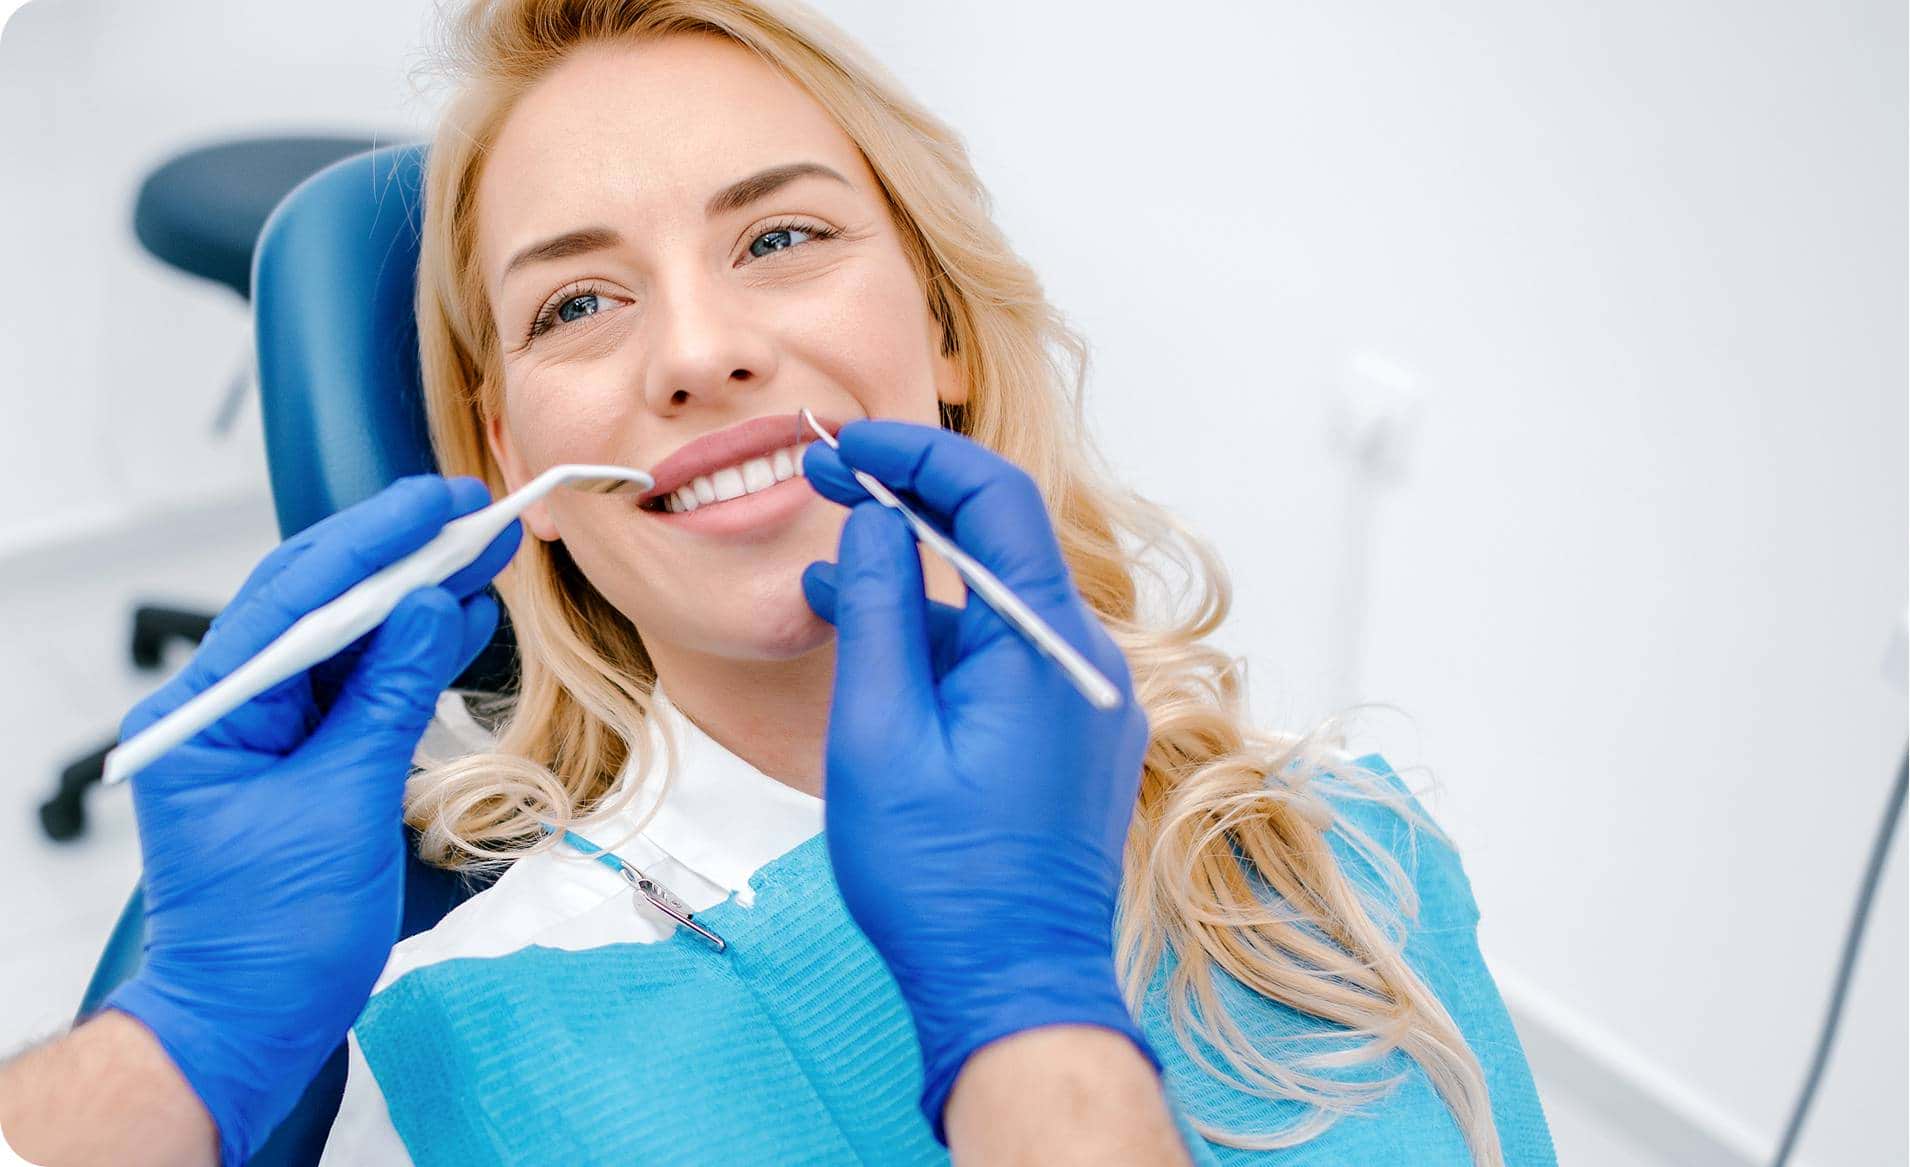 https://www.istockphoto.com/au/photo/woman-having-teeth-examining-at-dentist-gm1190798549-337690744